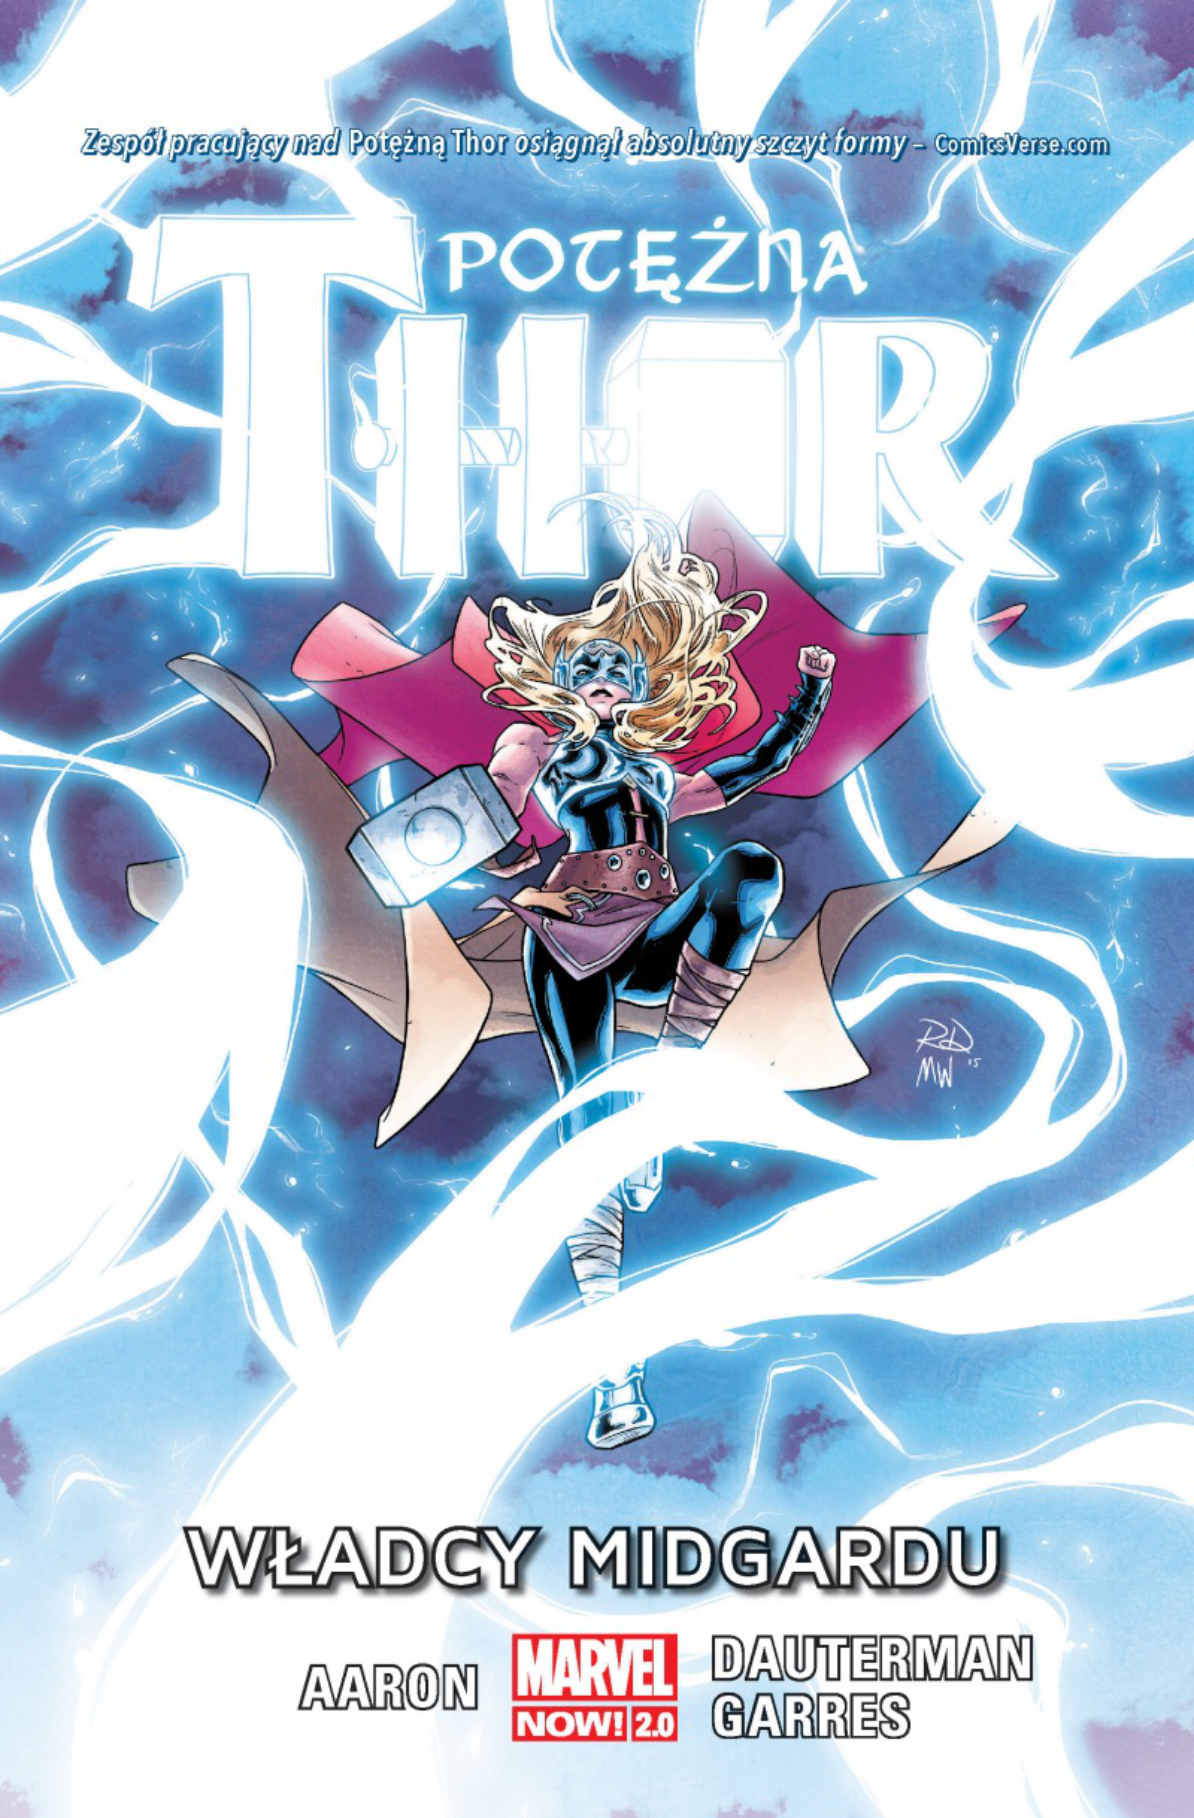 Potężna Thor Władcy Midgardu